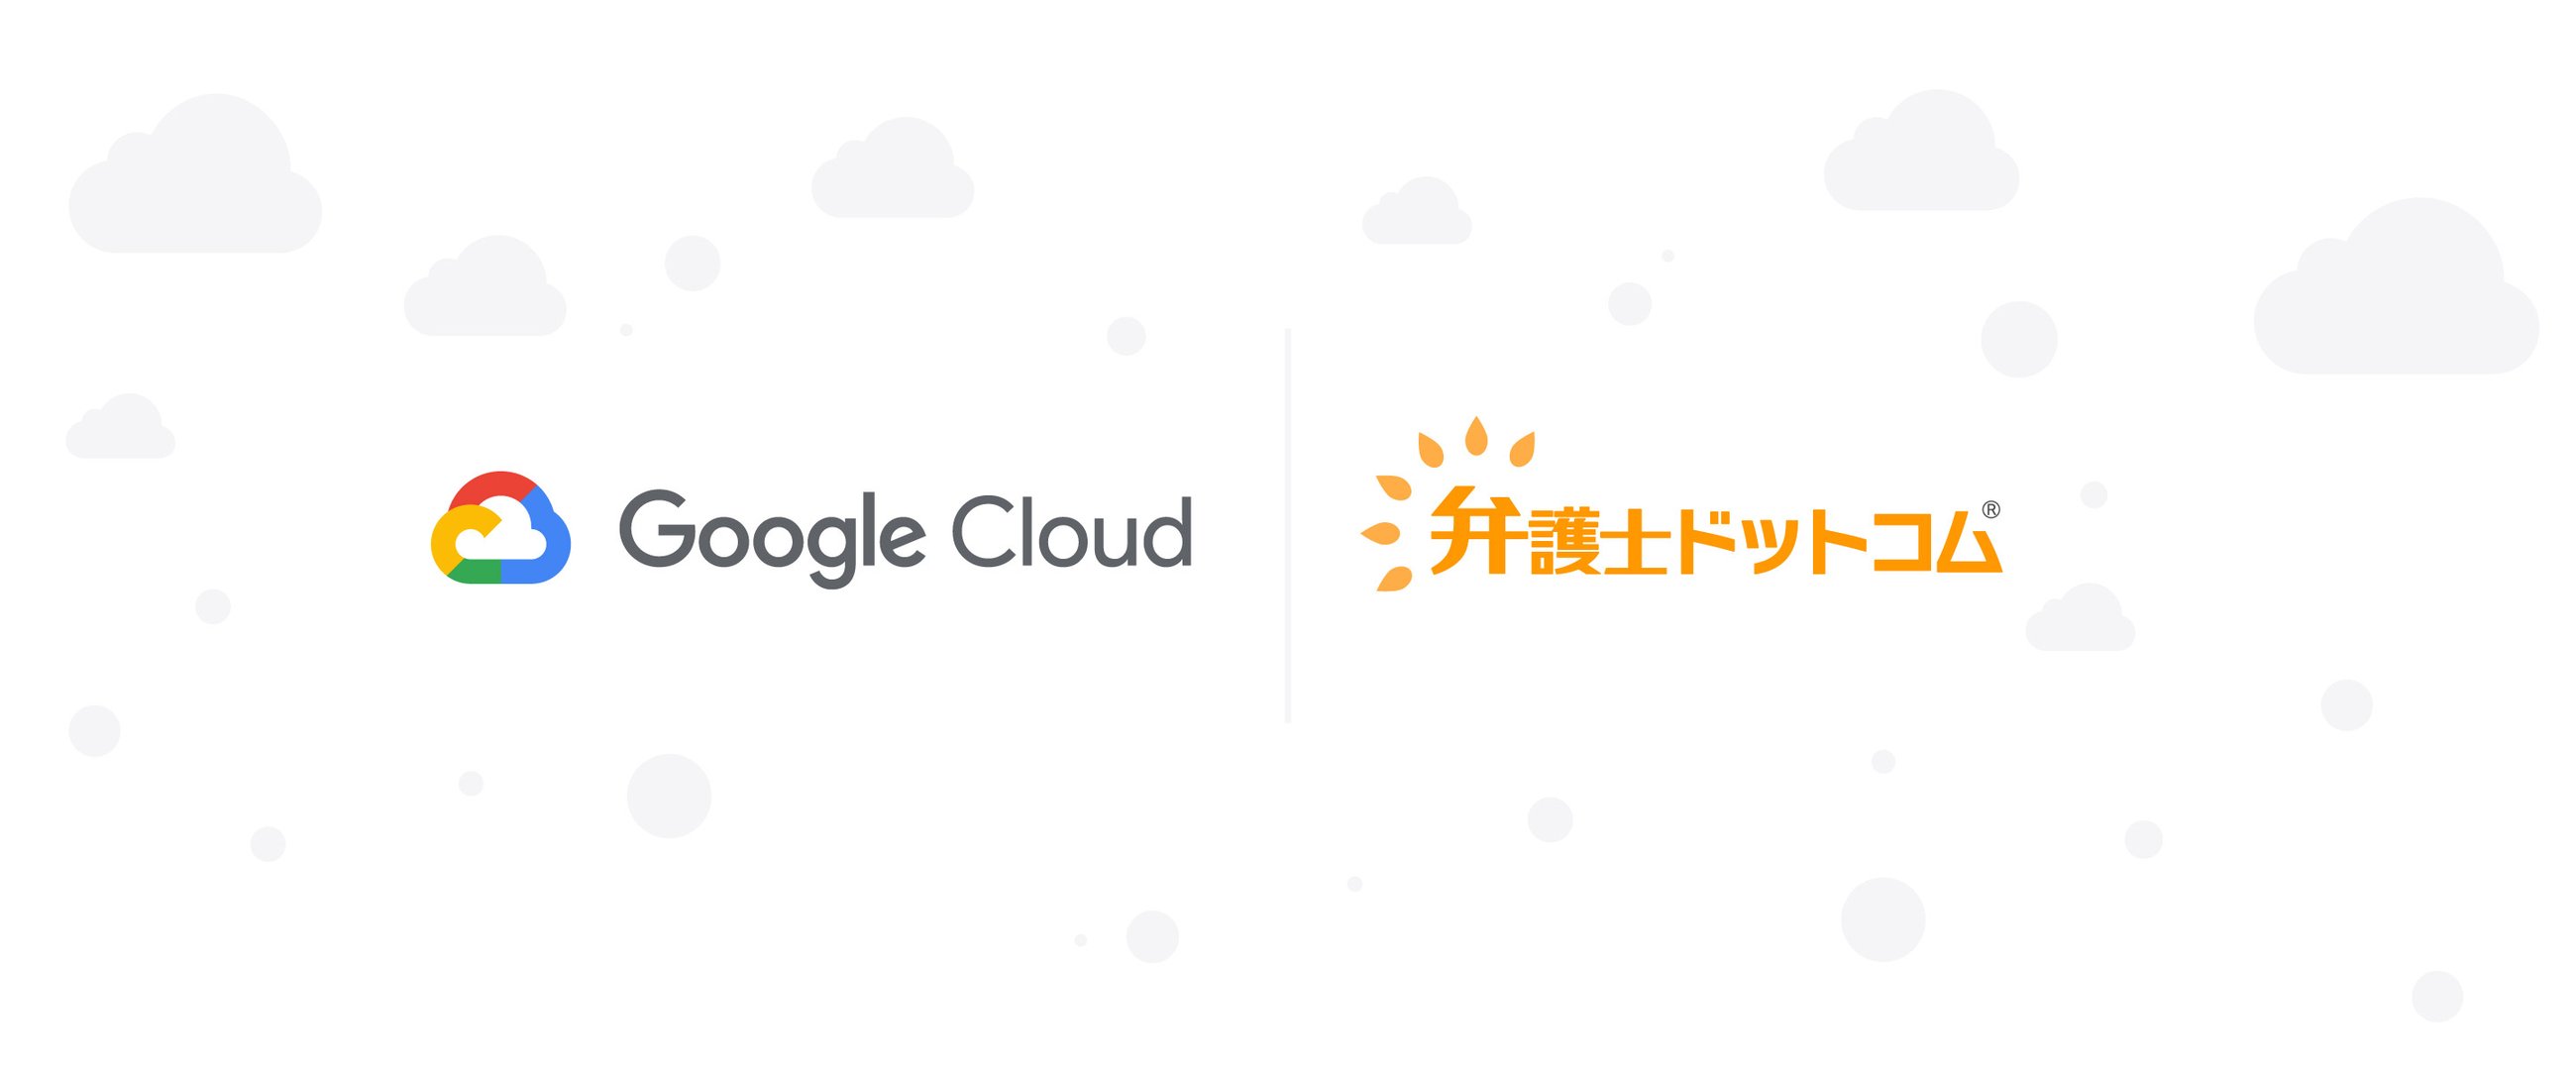 https://storage.googleapis.com/gweb-cloudblog-publish/images/hero_image_bengoshi_horizontal.max-2600x2600.jpg